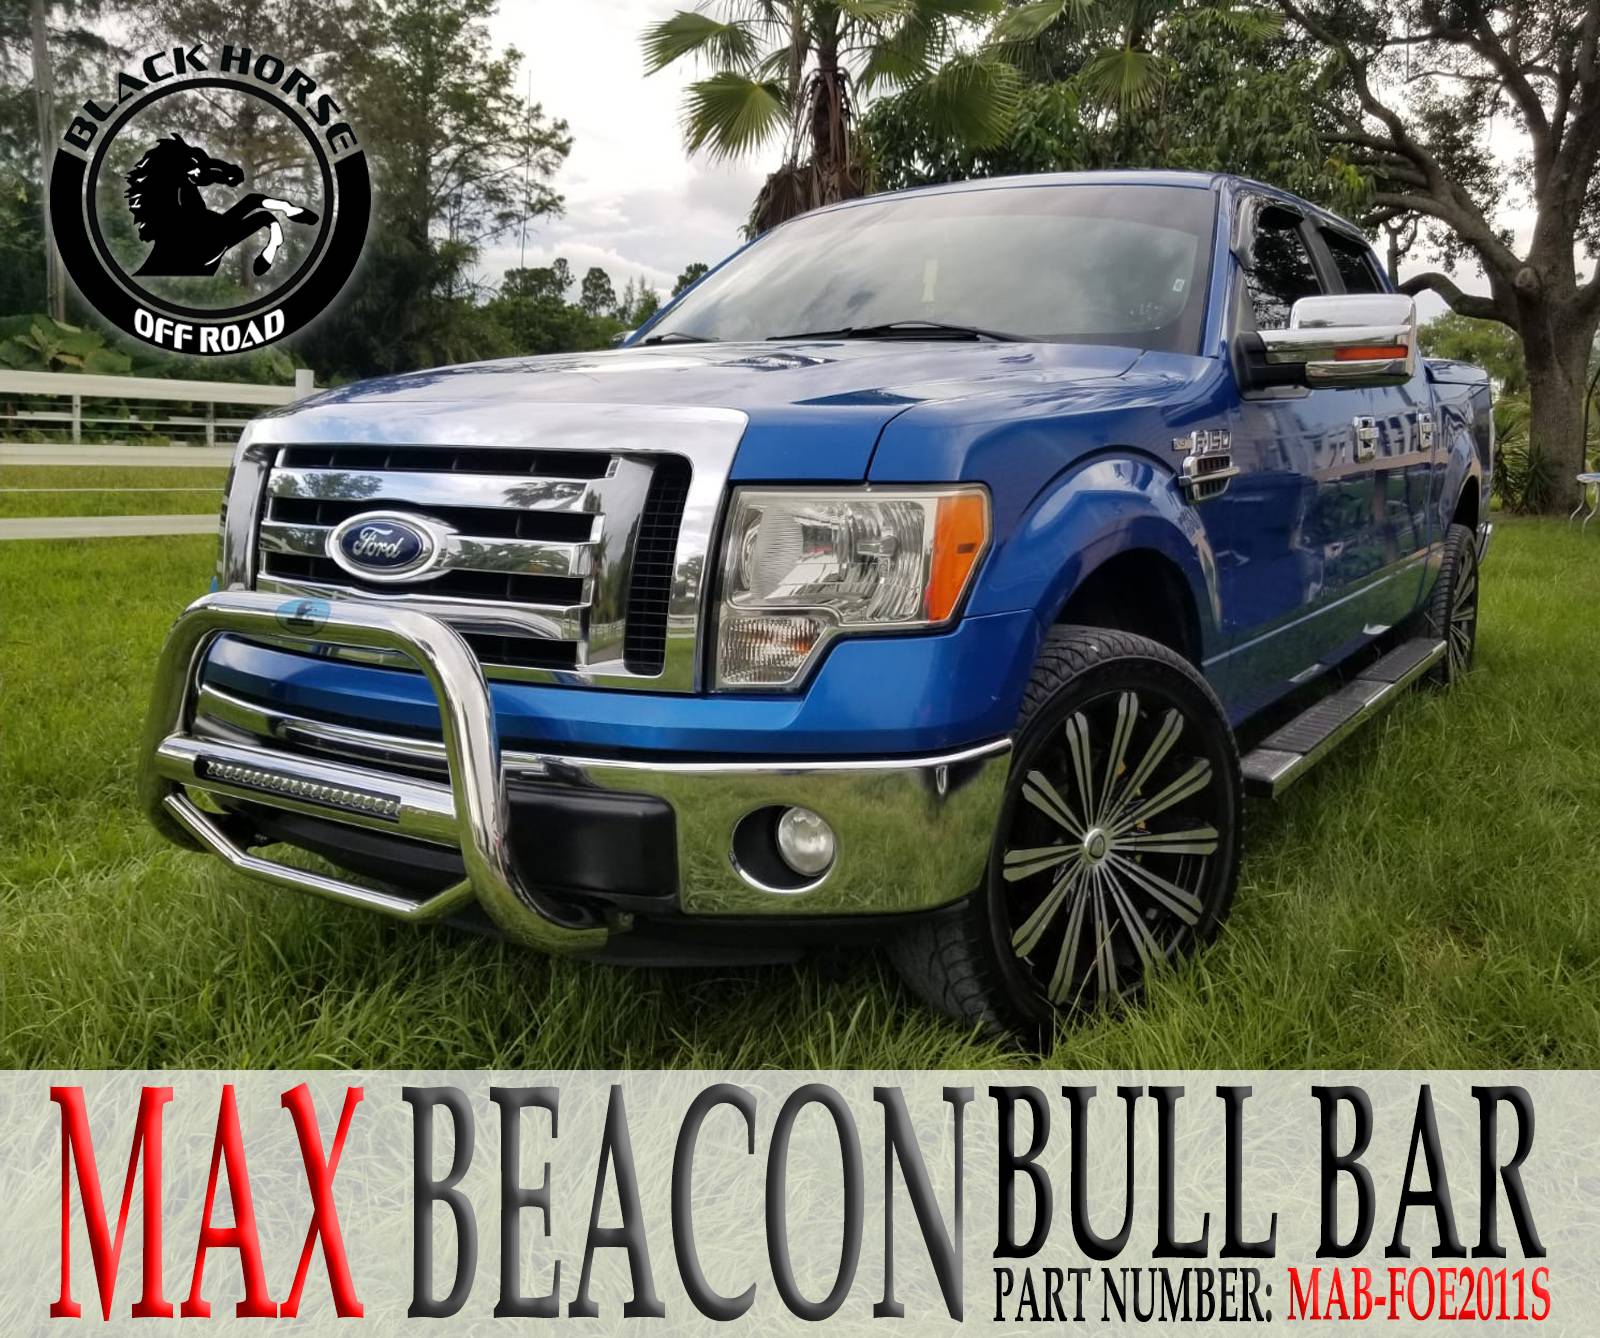 Max Beacon Bull Bar FORD